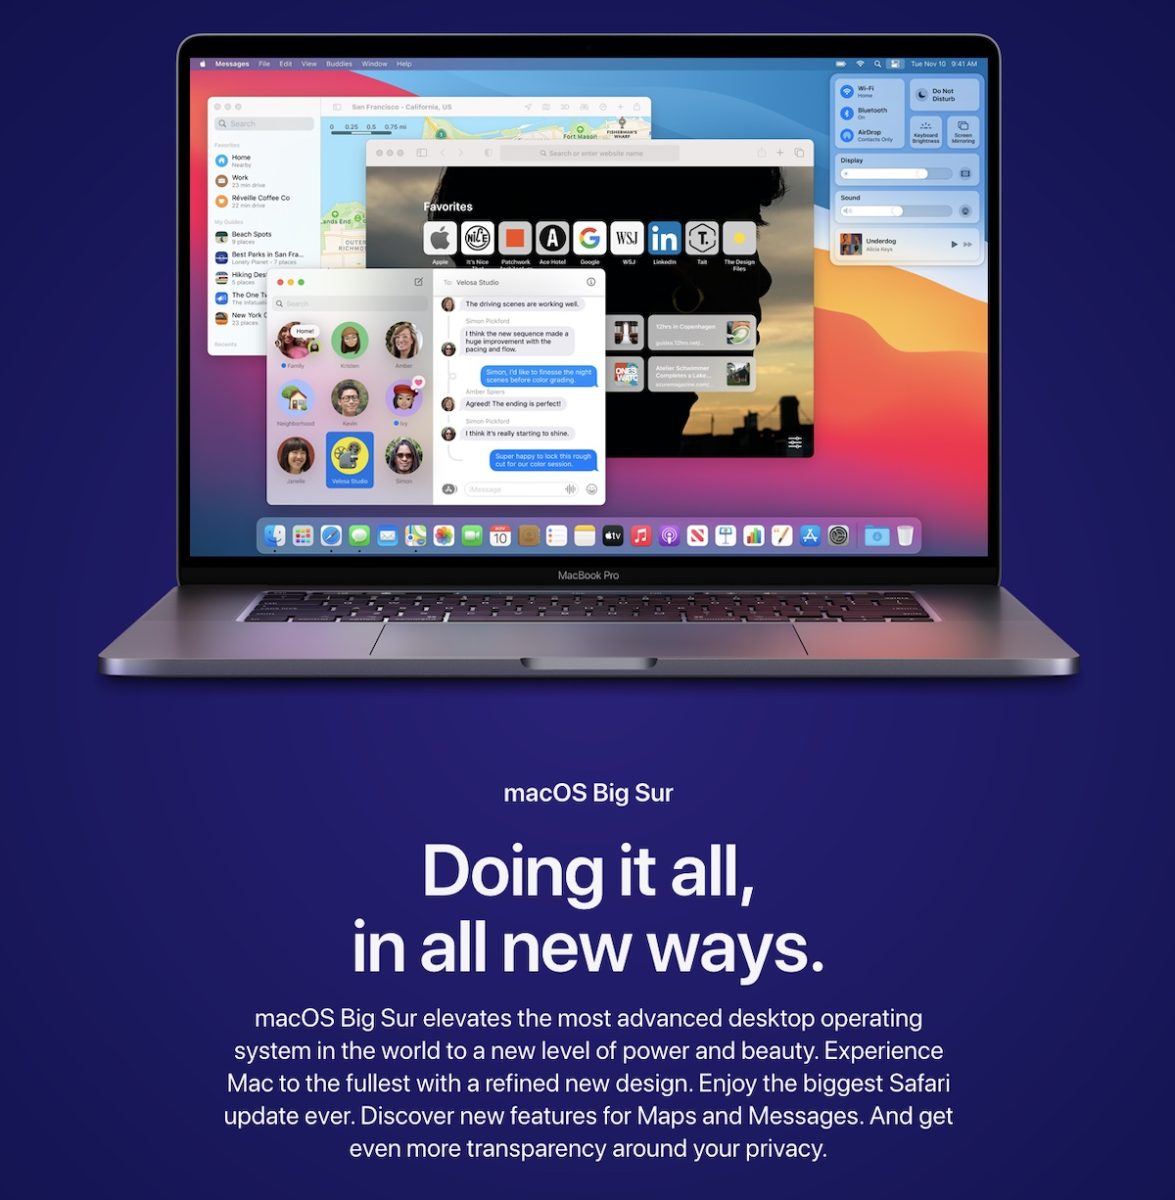 Here is macOS Big Sur Complete Features, Specs, Updates